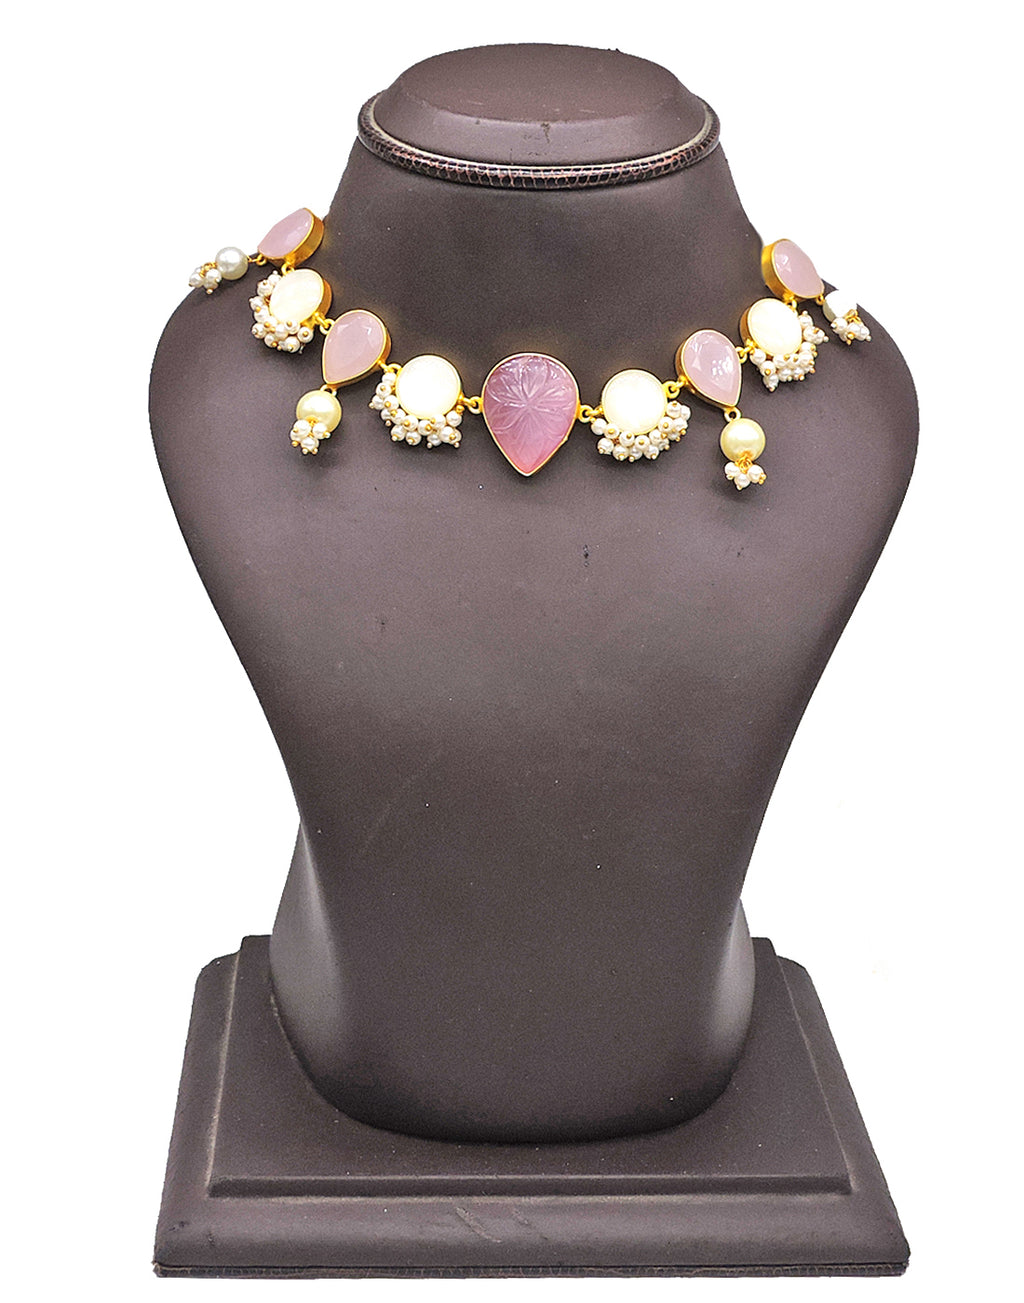 Quartz & Monalisa Necklace - Statement Necklaces - Gold-Plated & Hypoallergenic Jewellery - Made in India - Dubai Jewellery - Dori